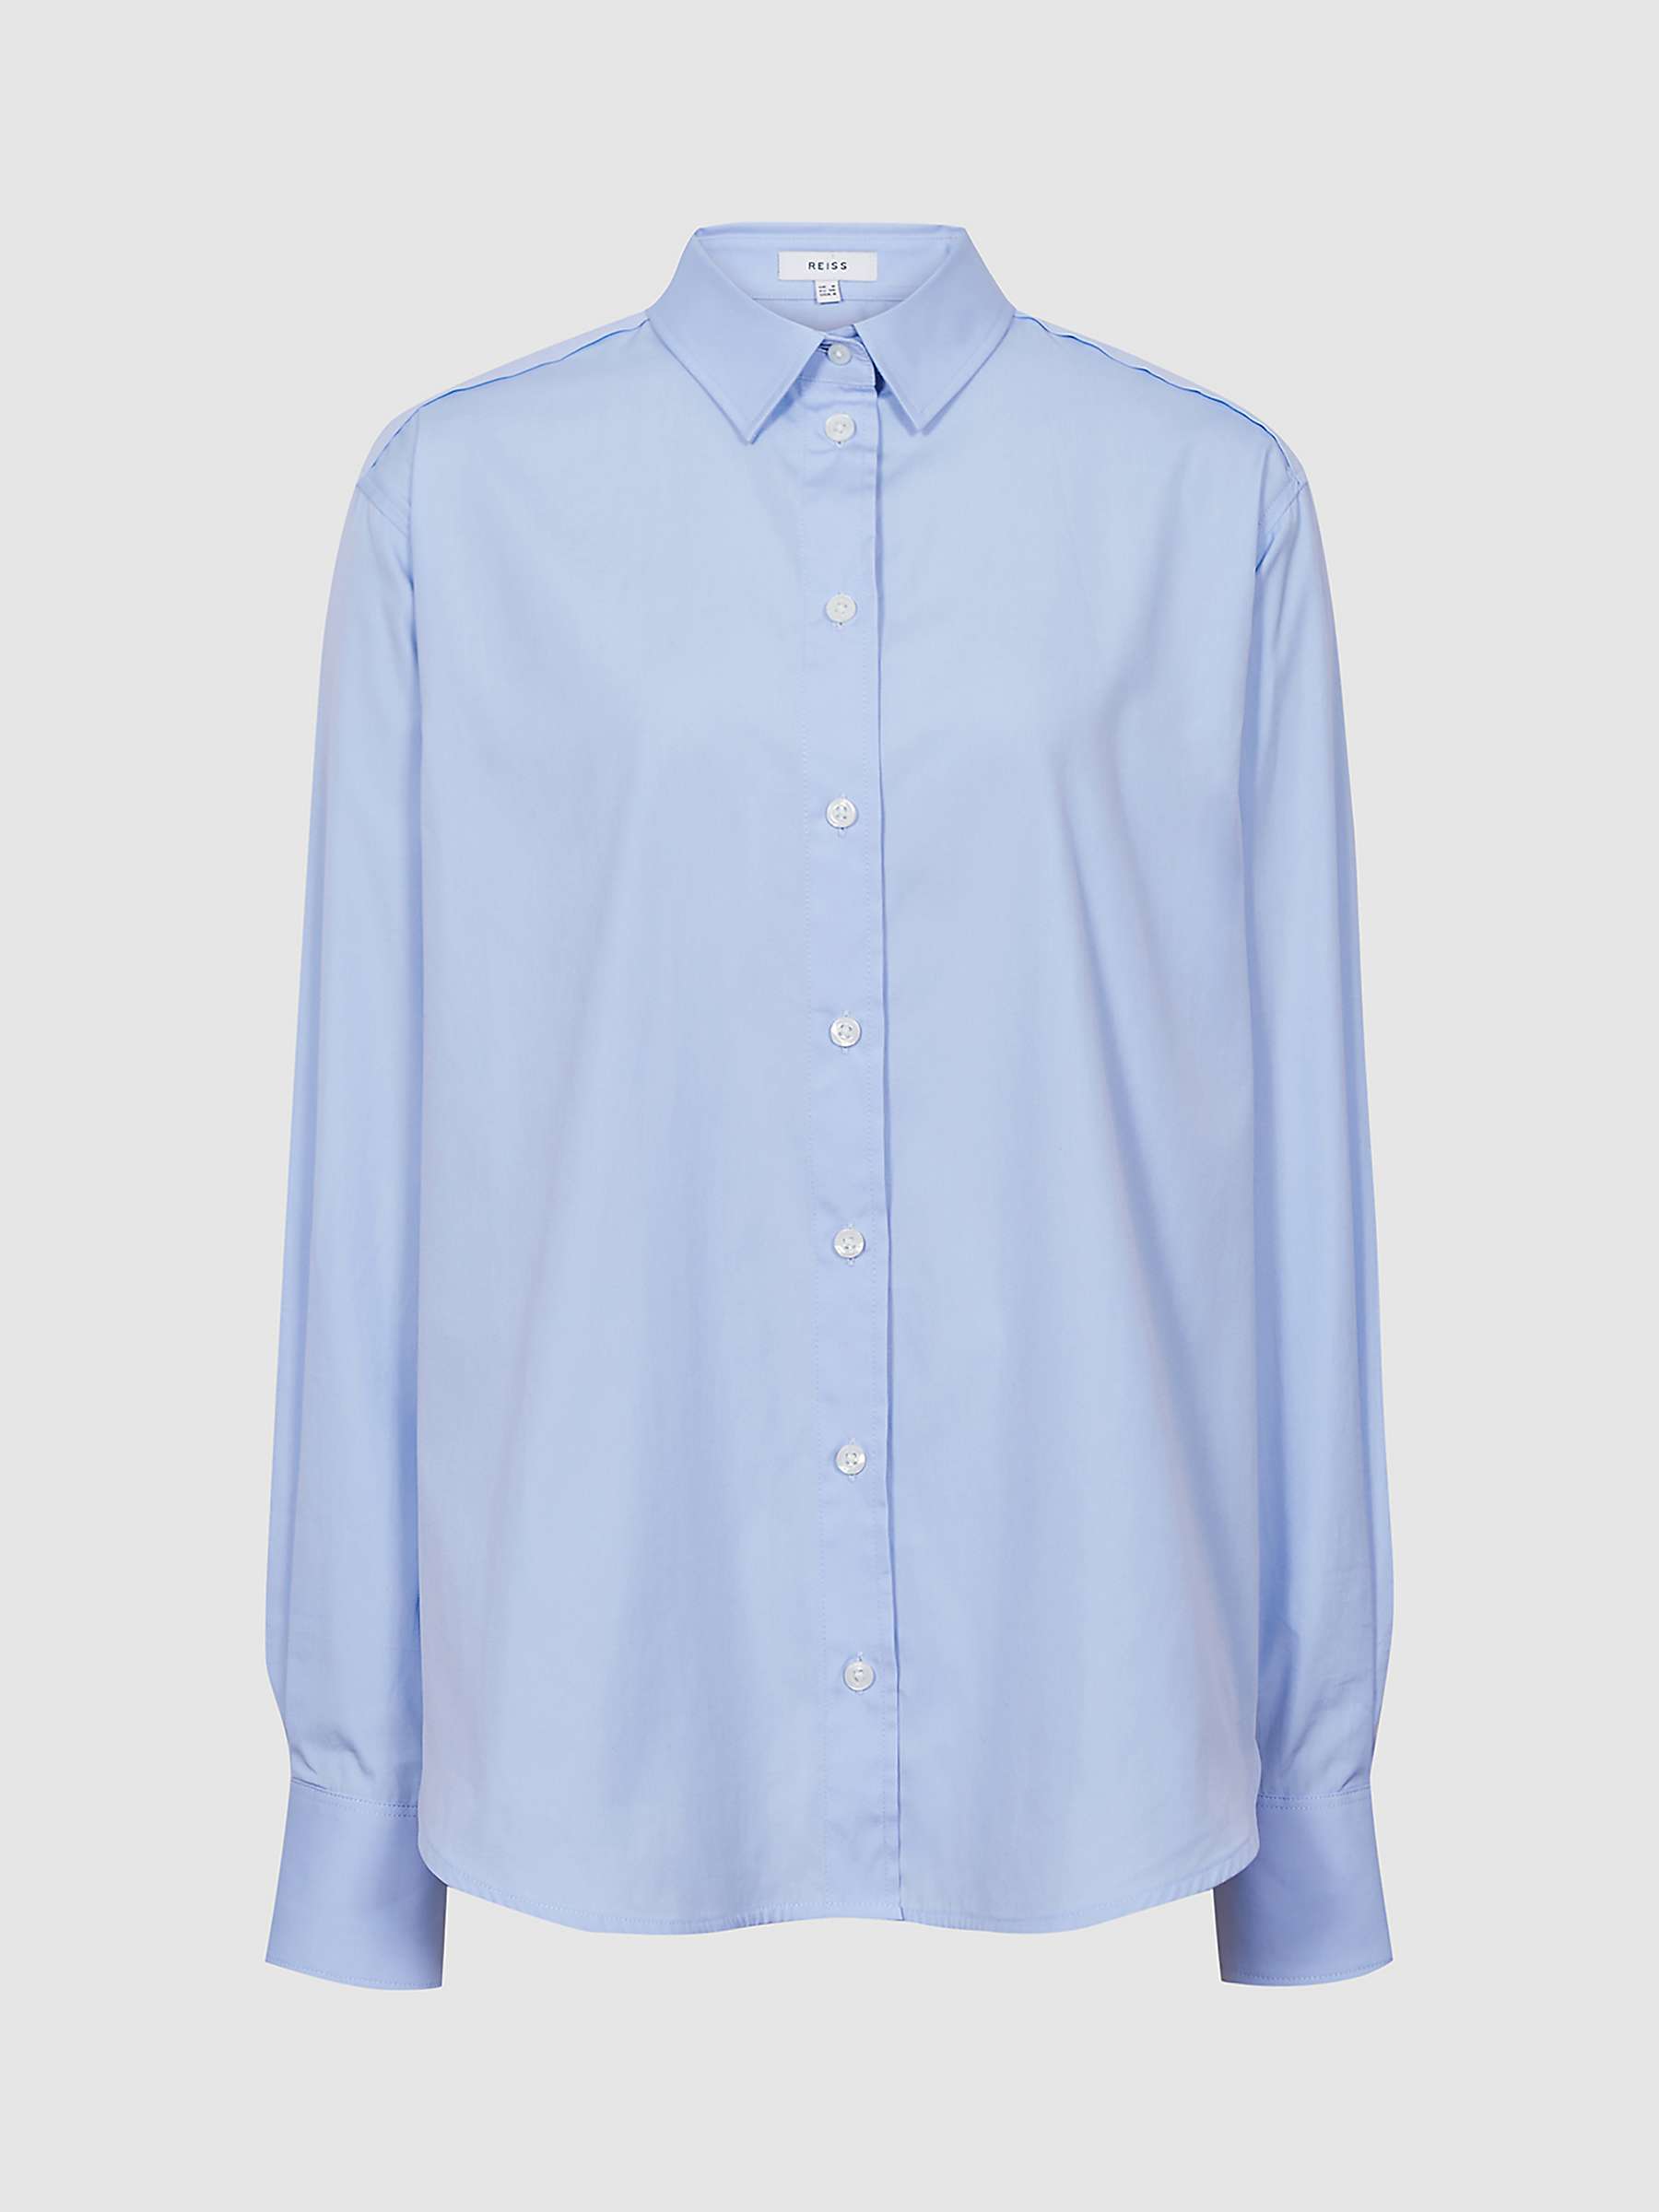 Reiss Jenny Cotton Shirt, Blue at John Lewis & Partners